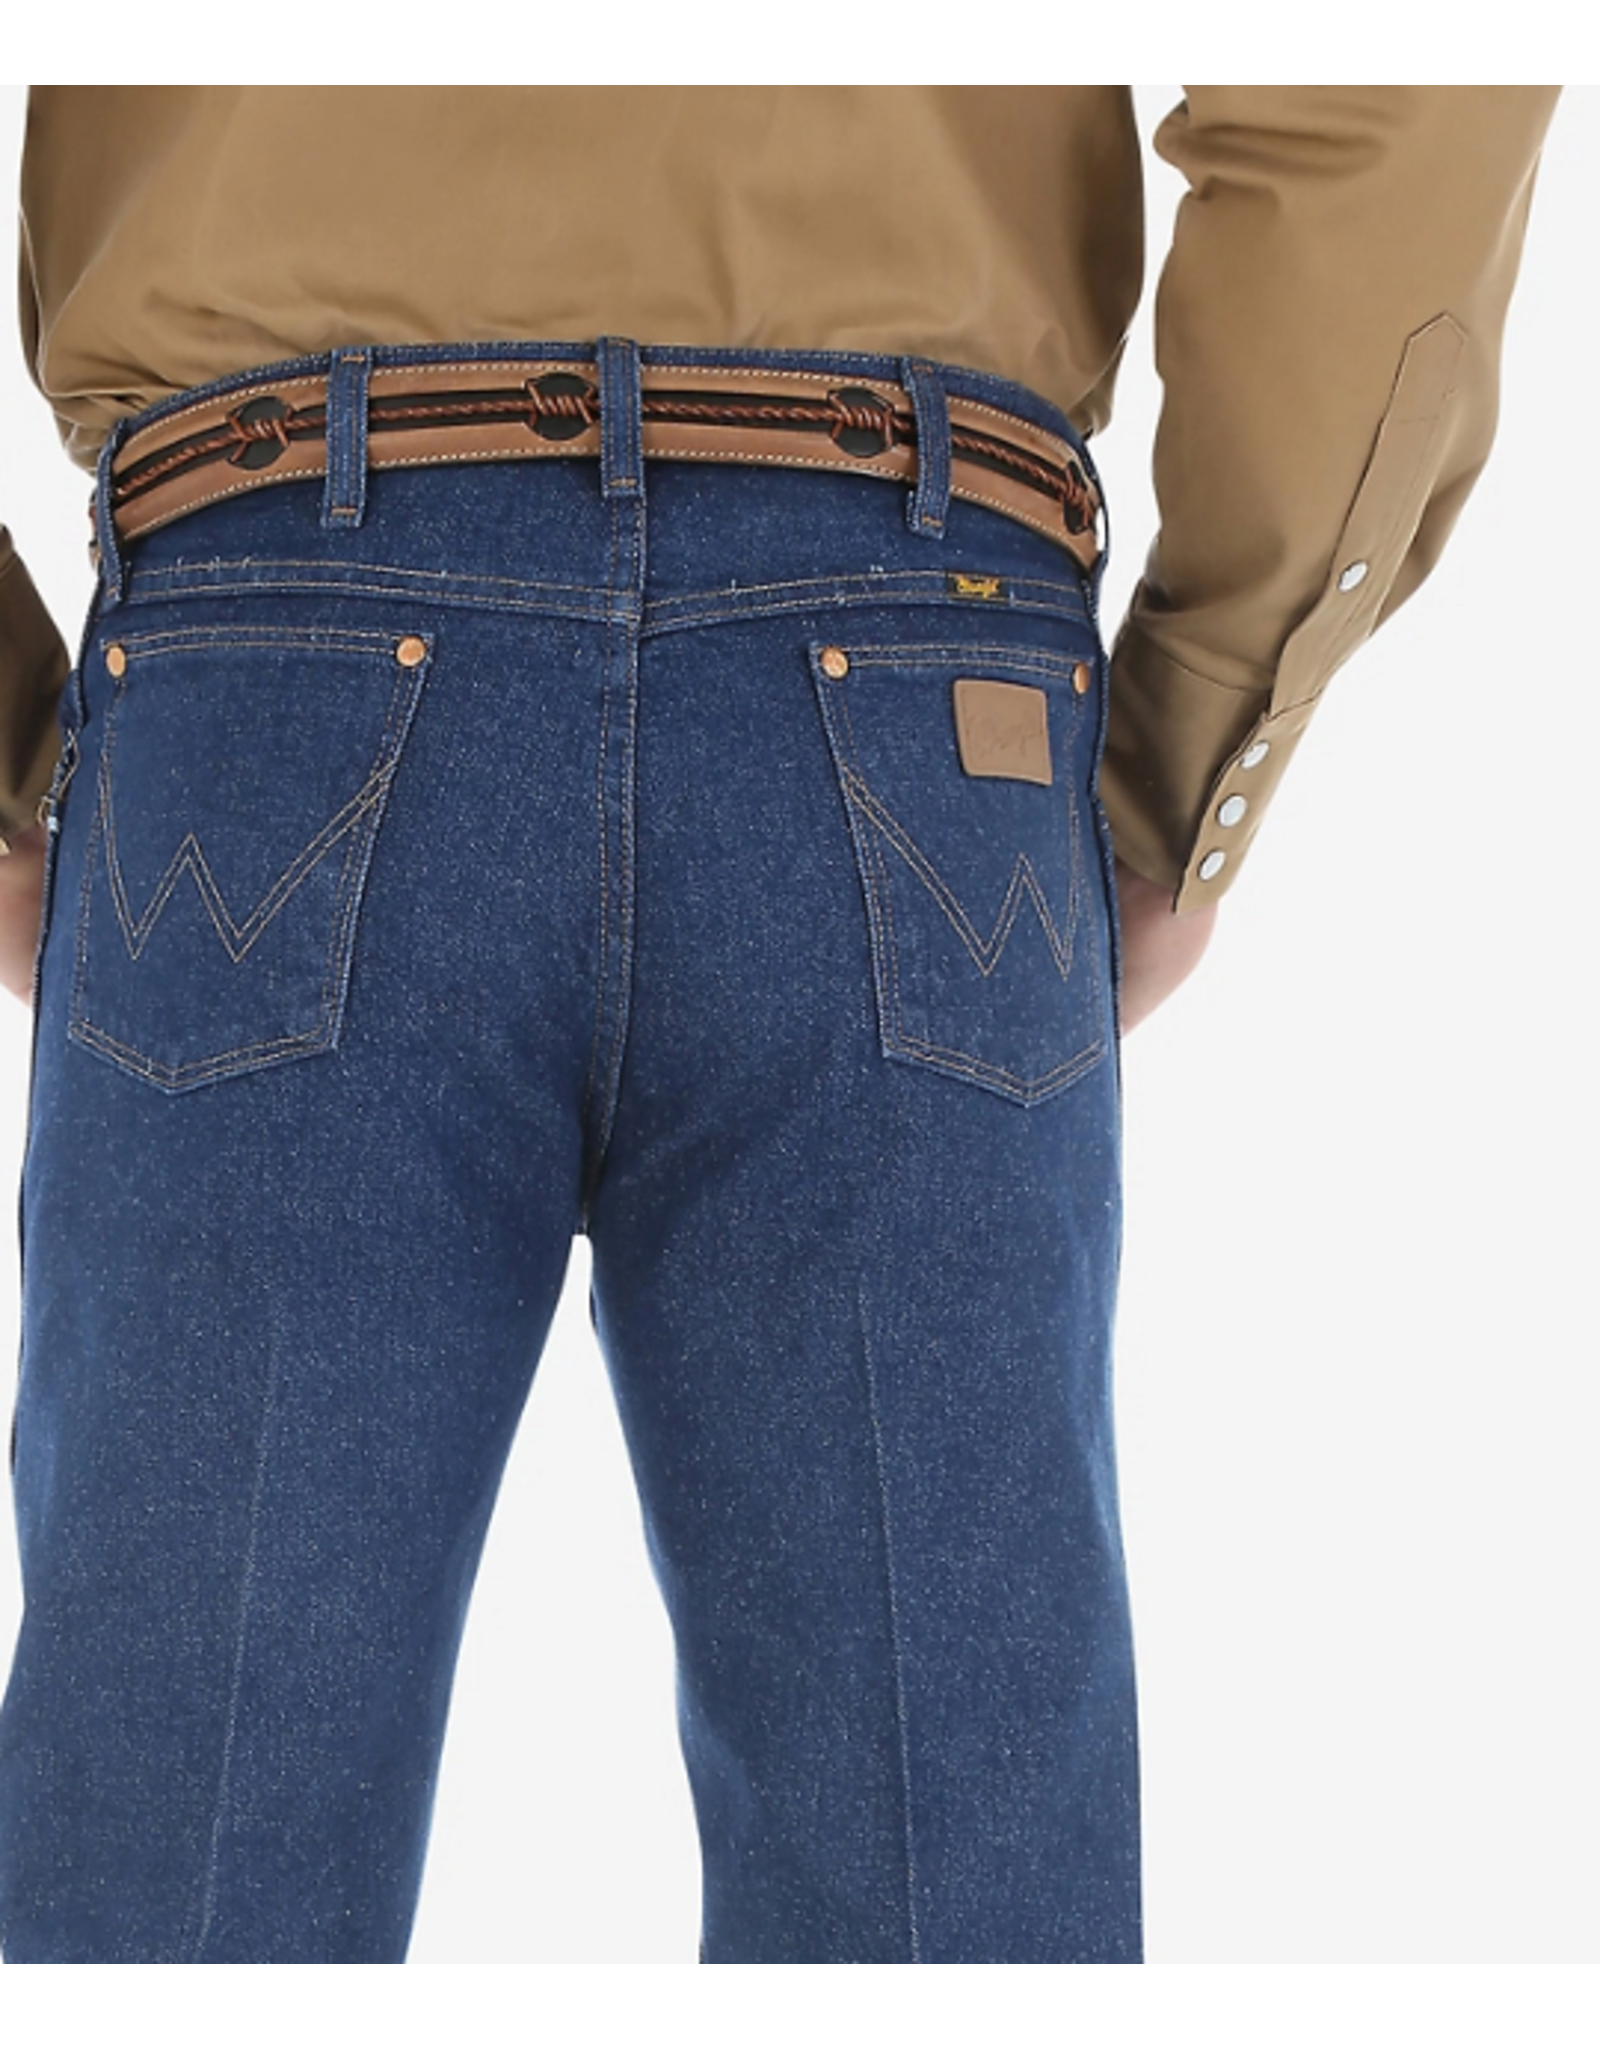 Wrangler Men's Original Fit Cowboy Cut 13MWZPW Jeans